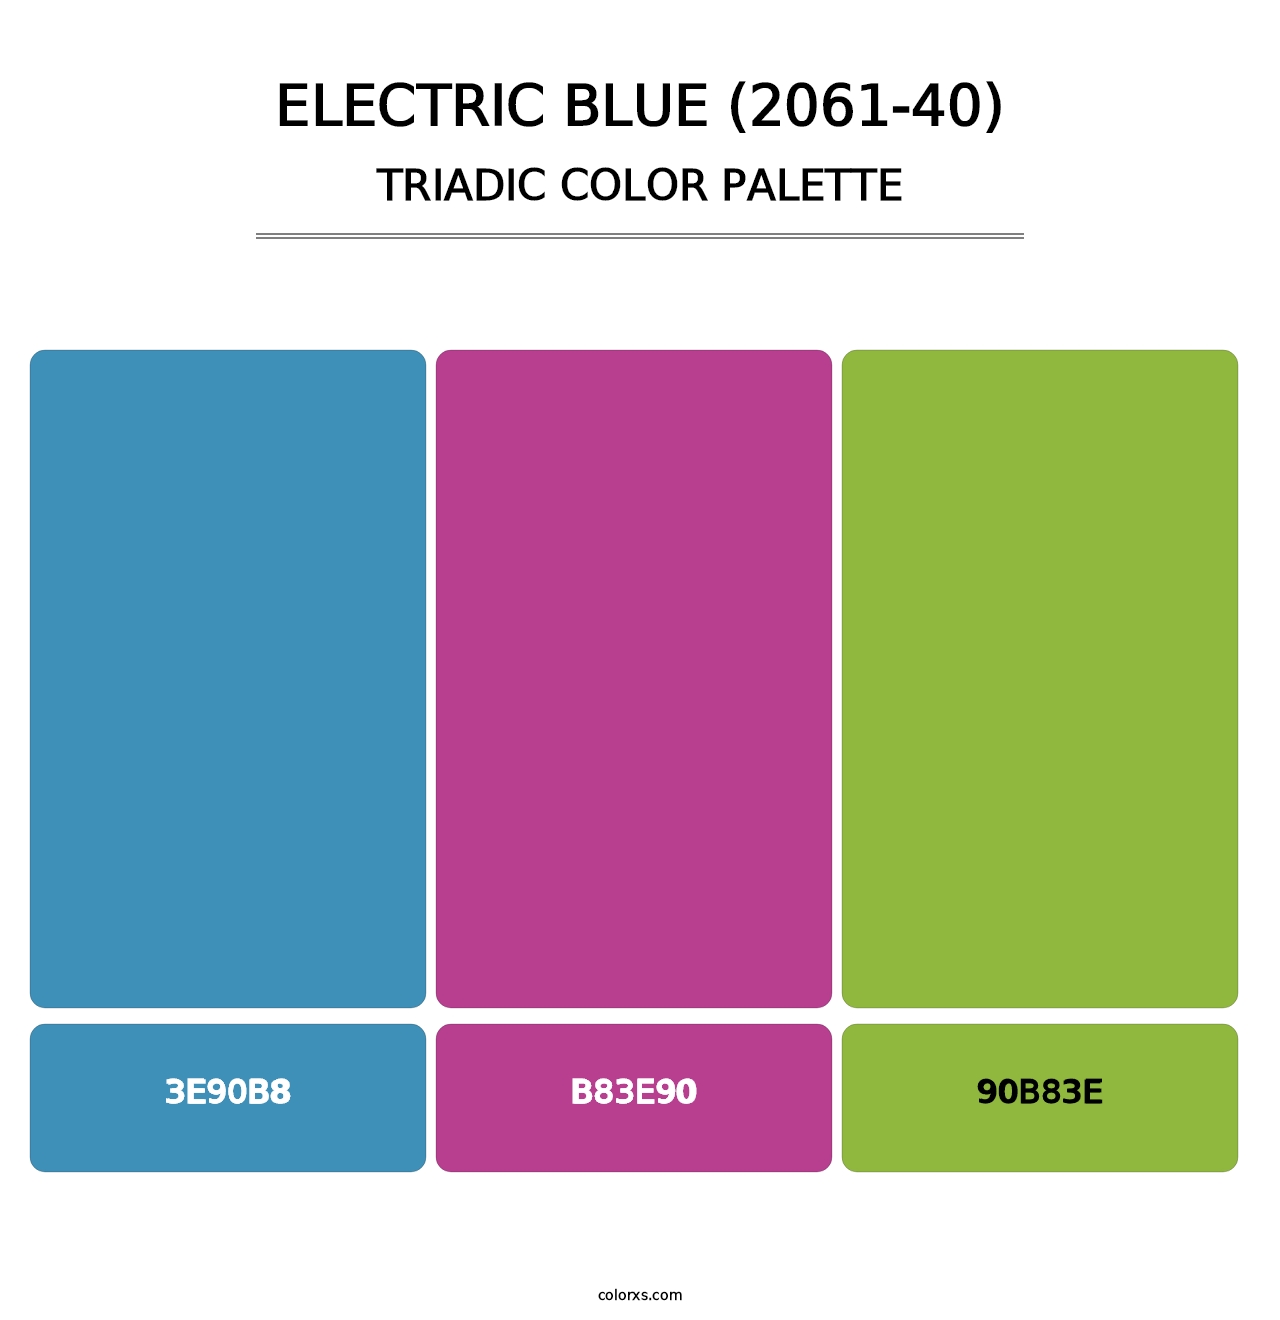 Electric Blue (2061-40) - Triadic Color Palette